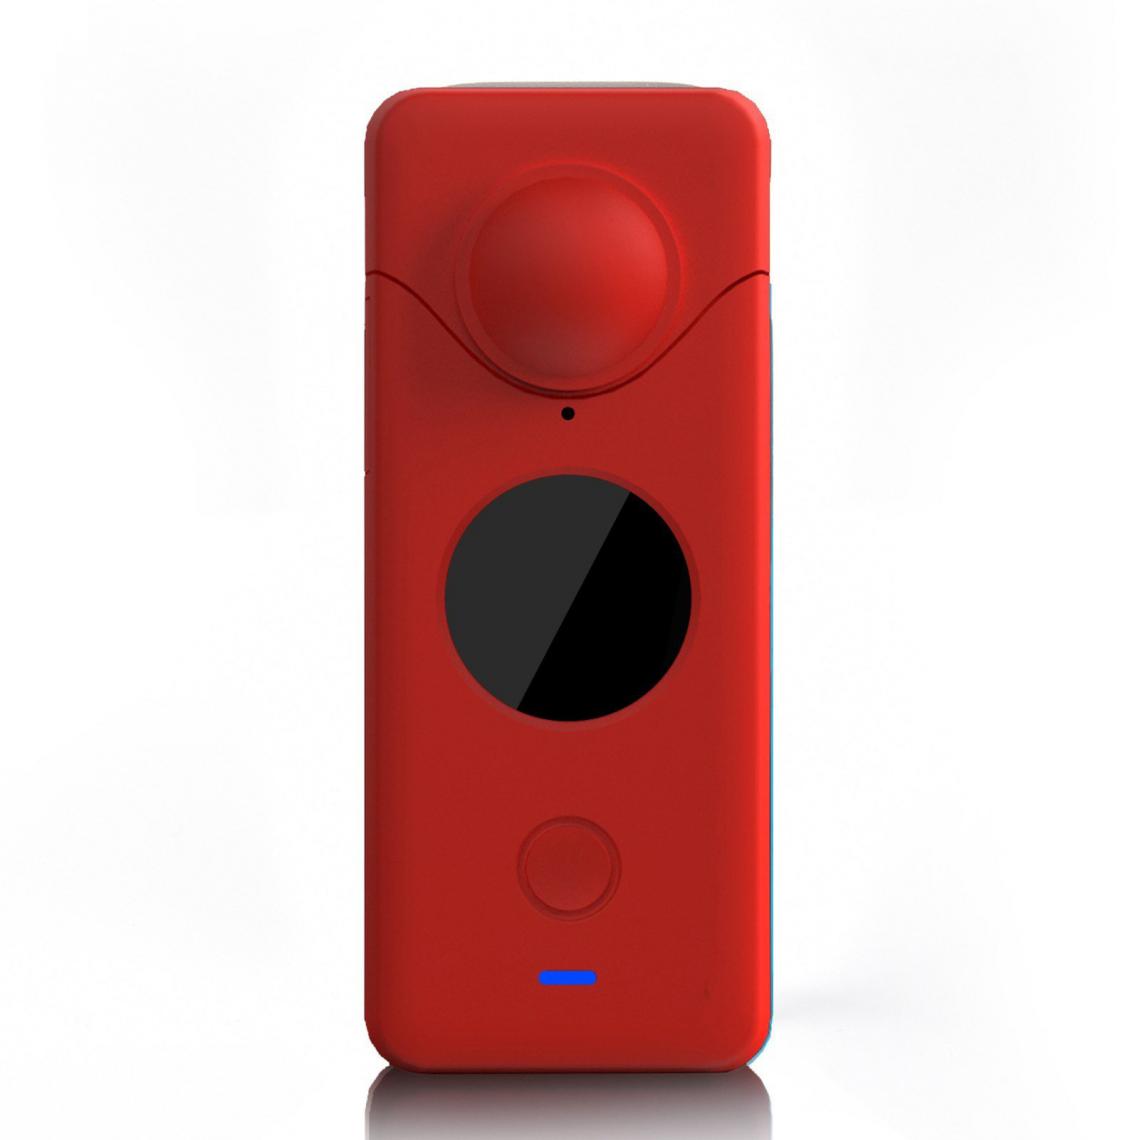 Justgreenbox - Remplacement de la coque de protection en silicone pour accessoire de caméra Insta360 ONE X2, Bleu - Caméras Sportives